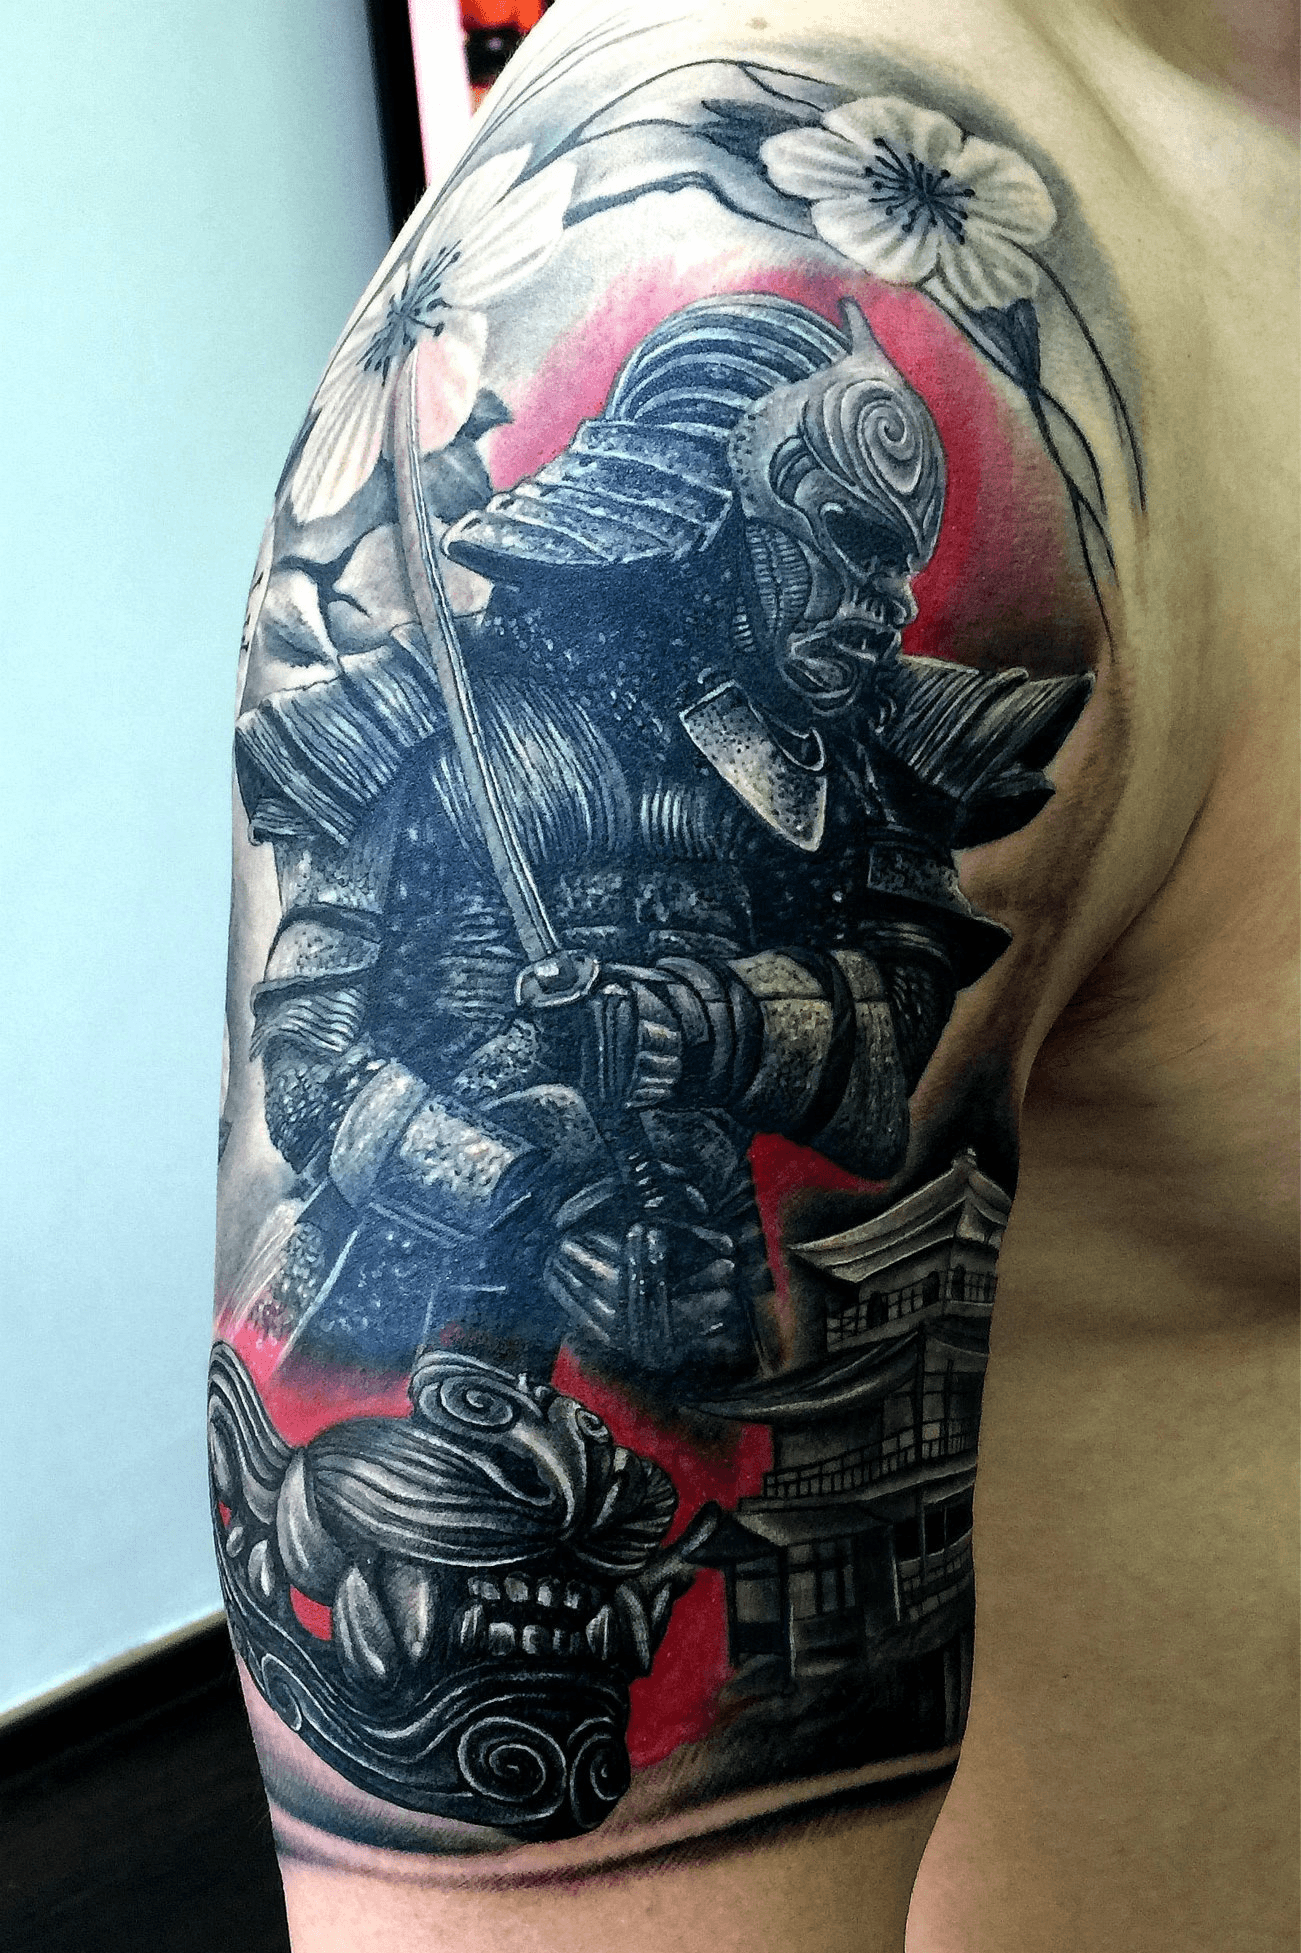 Amon Amarth on Twitter A very glorious tattoo of the Berserker himself  Well done Fabien Abbet  httpstcoijhNugKiC1  Twitter